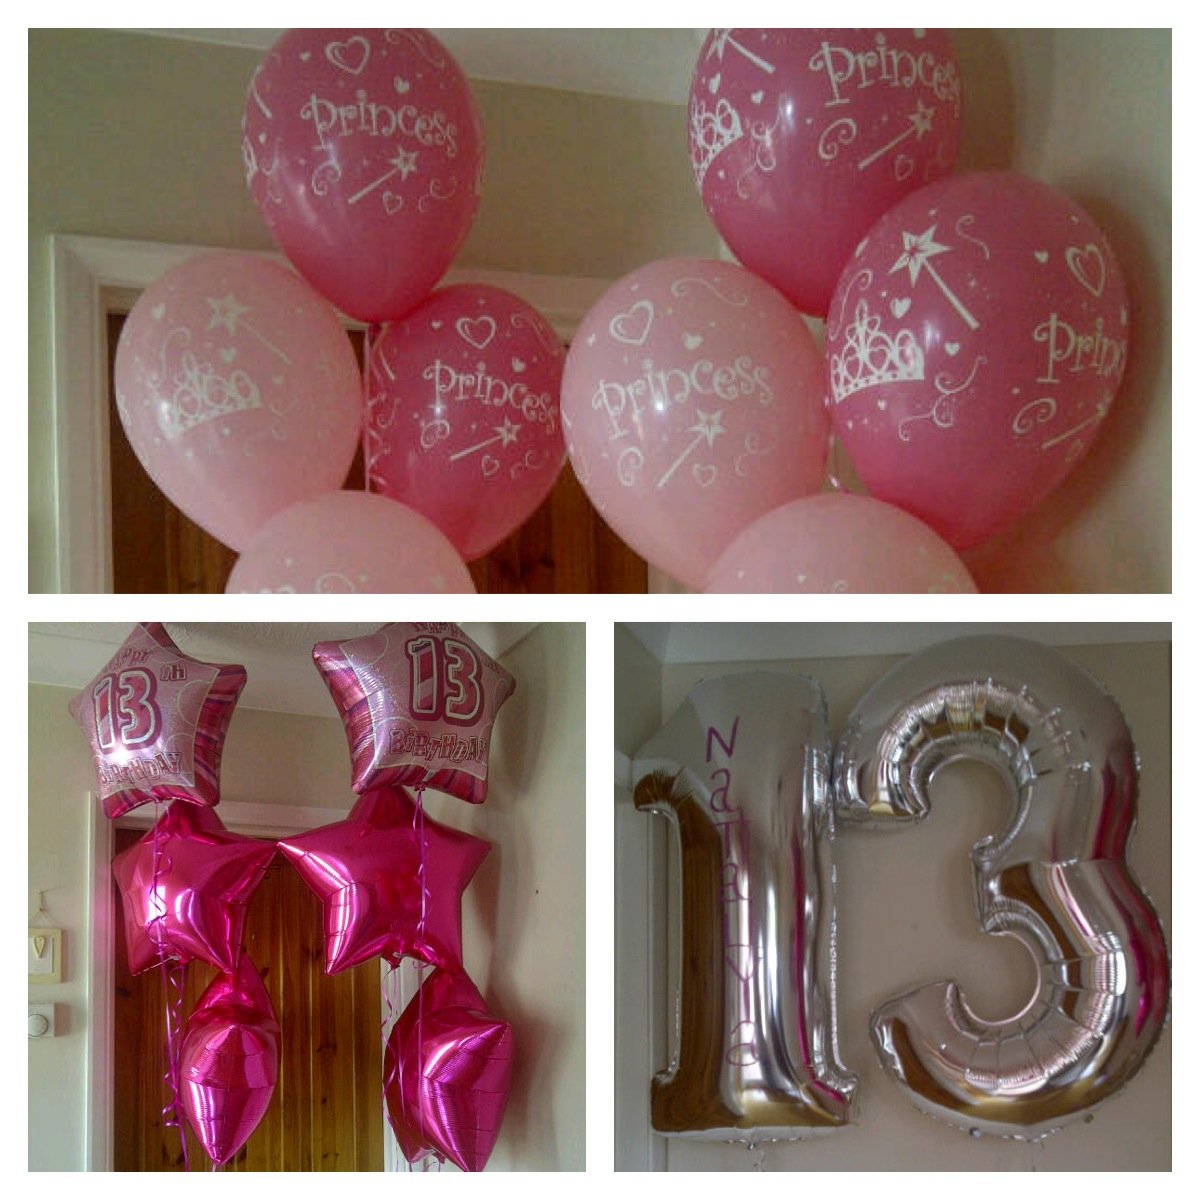 13th Birthday balloons